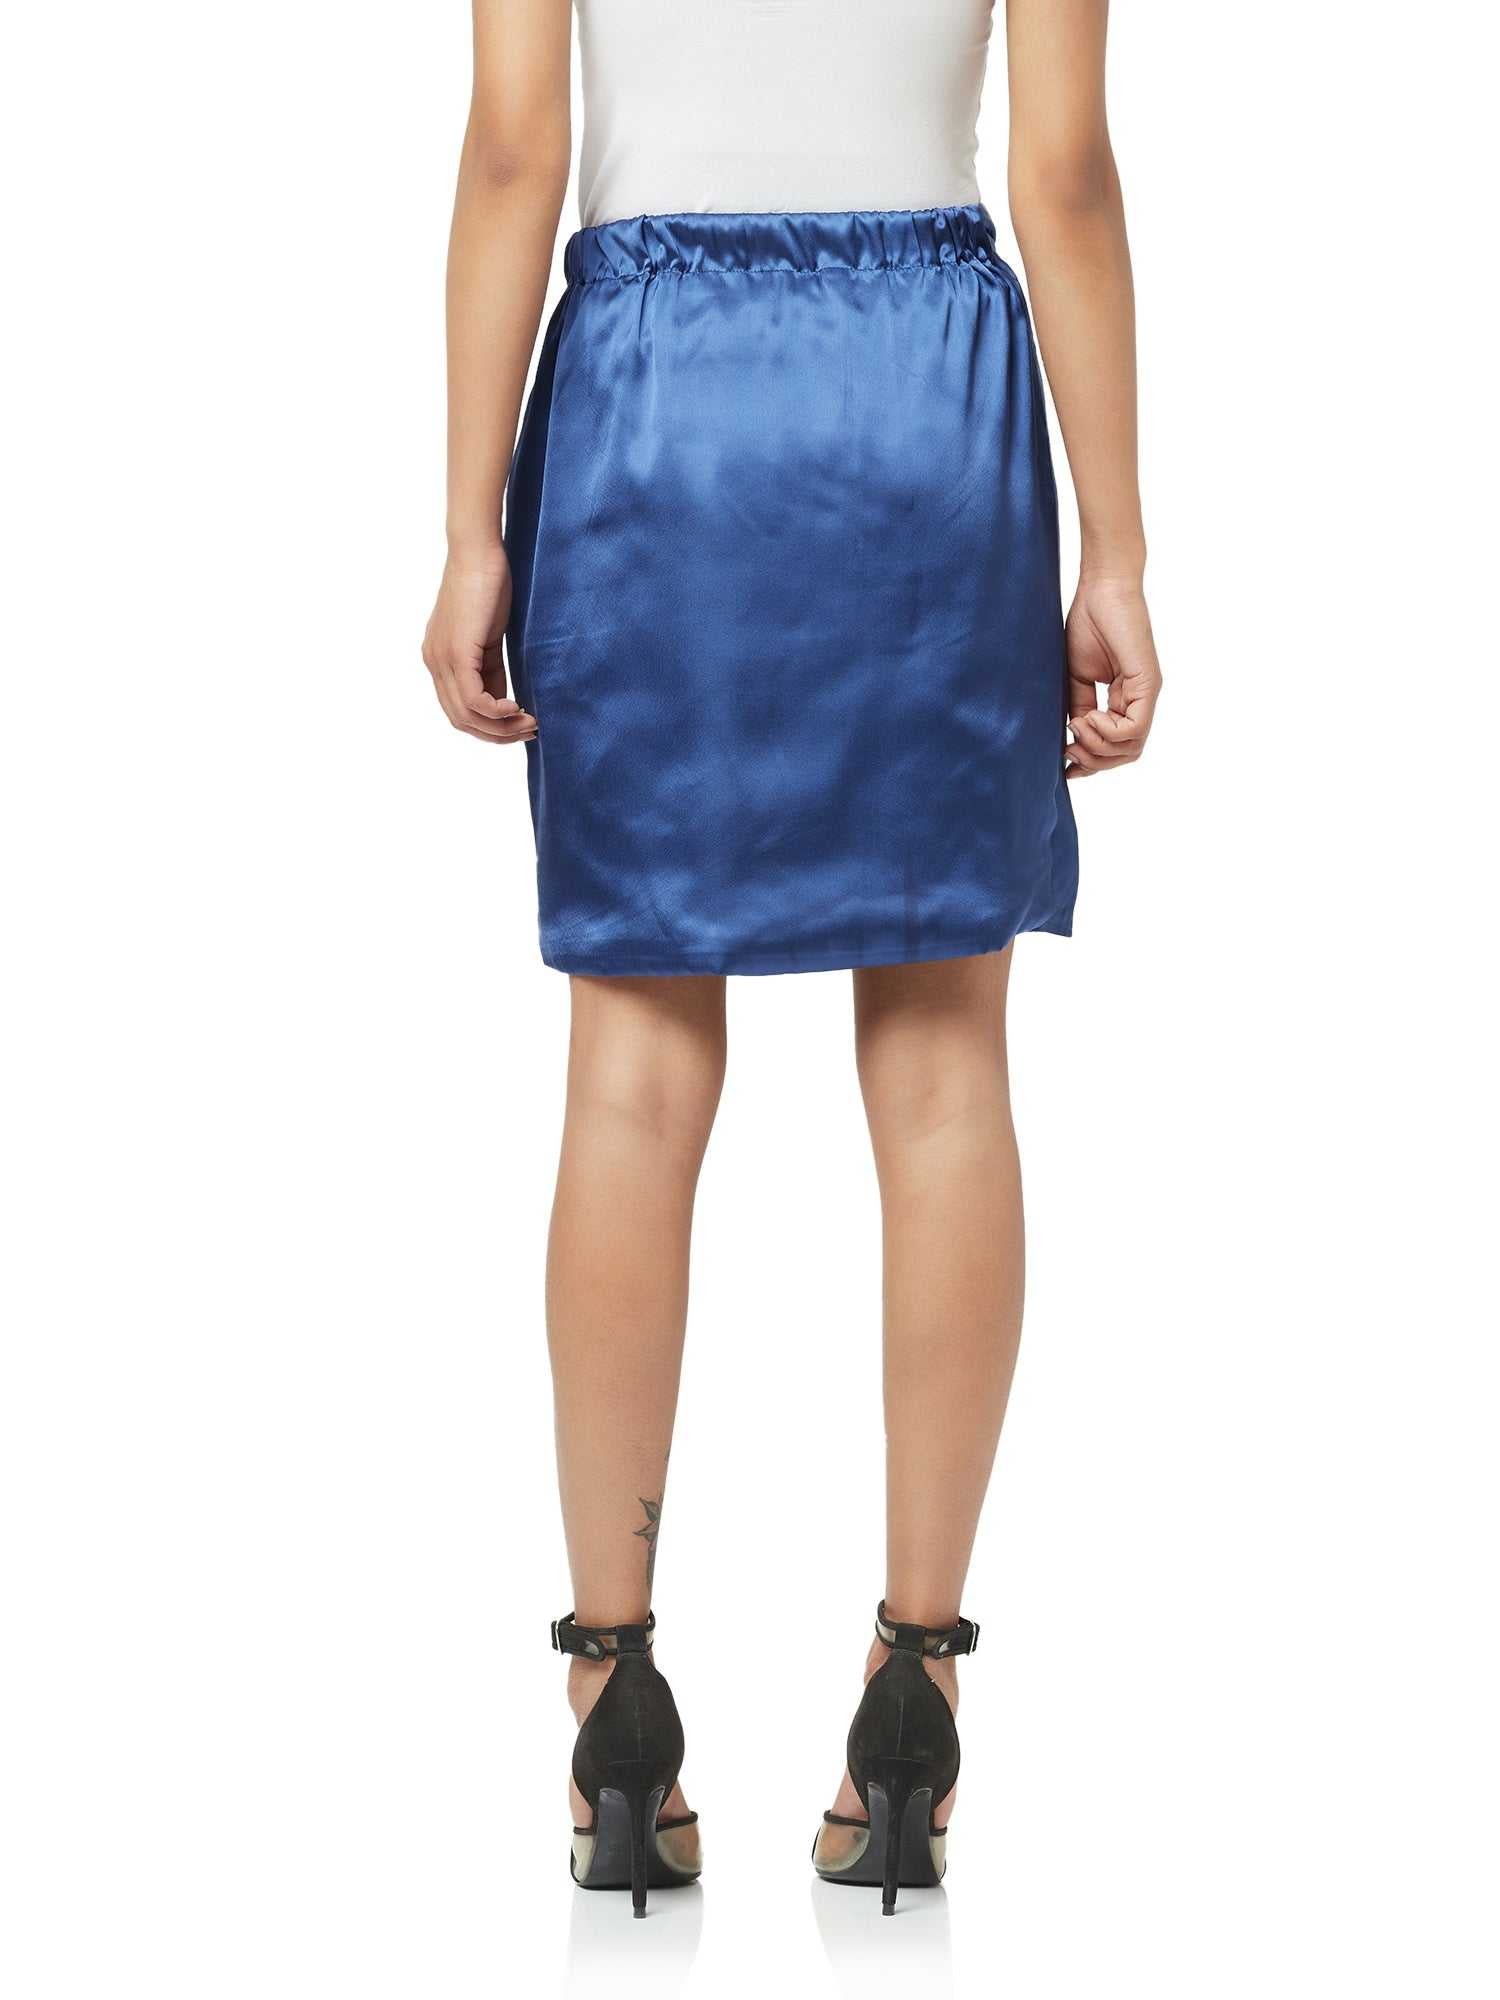 shiny satin blue pleated wrap skirt